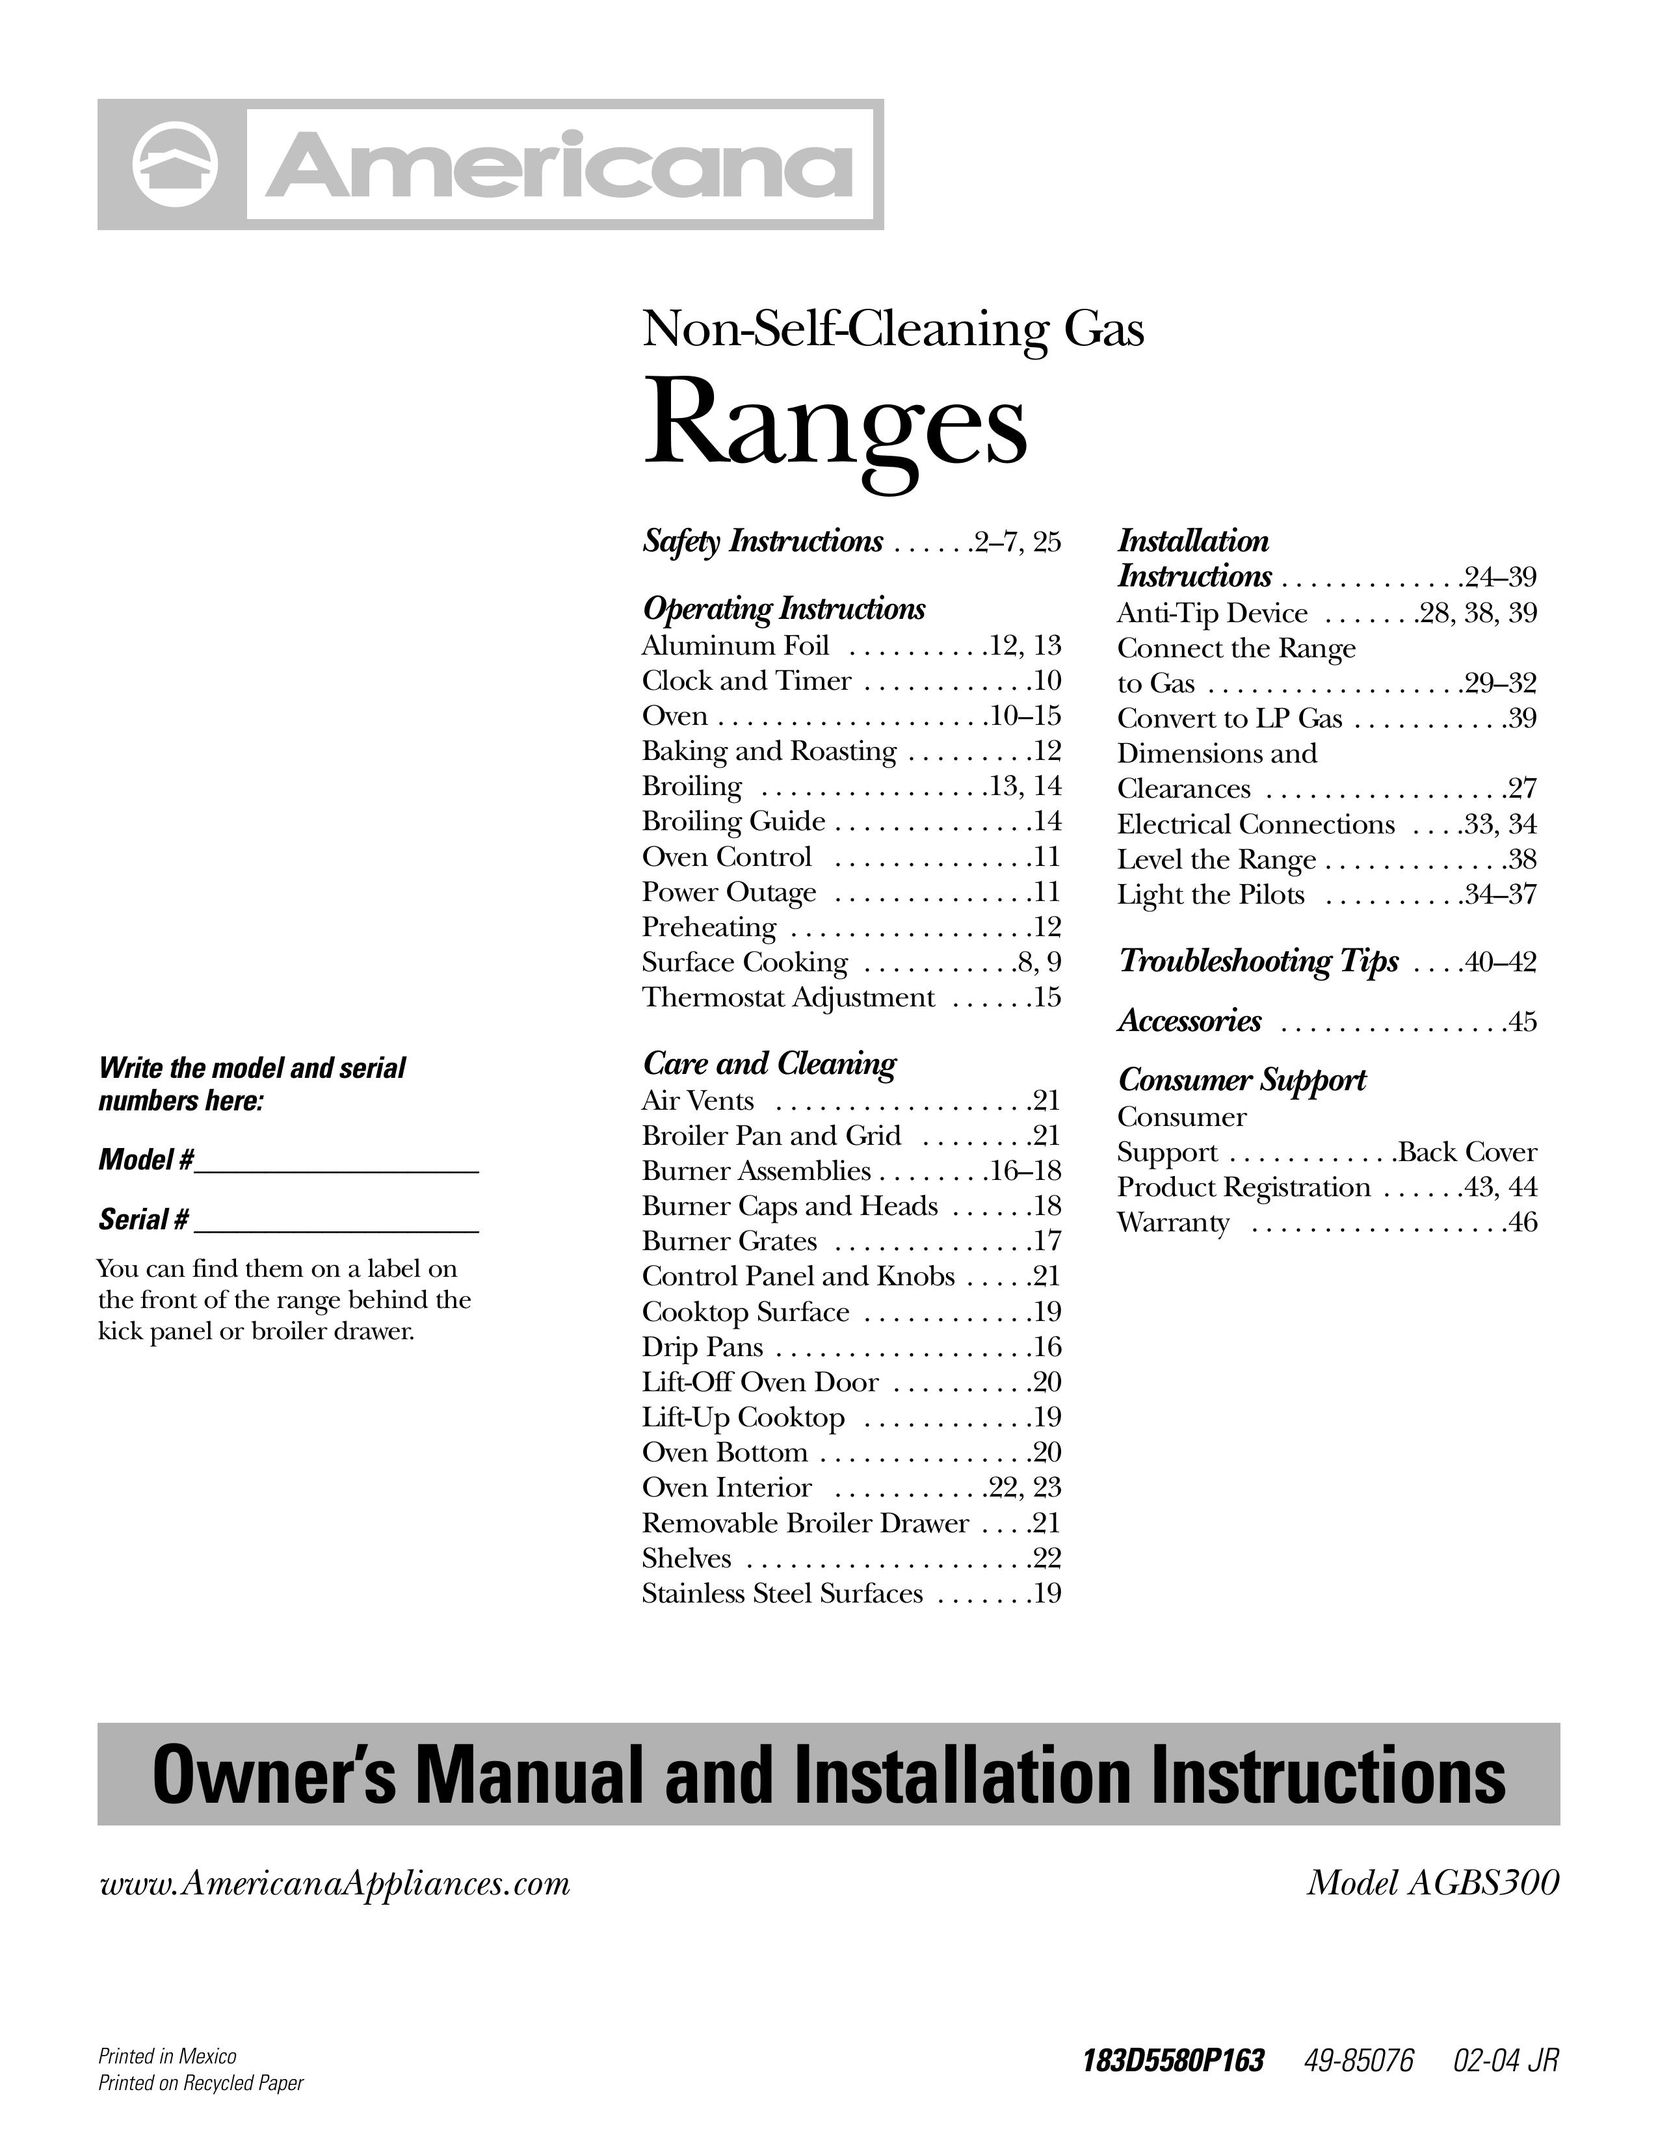 Americana Appliances AGBS300 Range User Manual